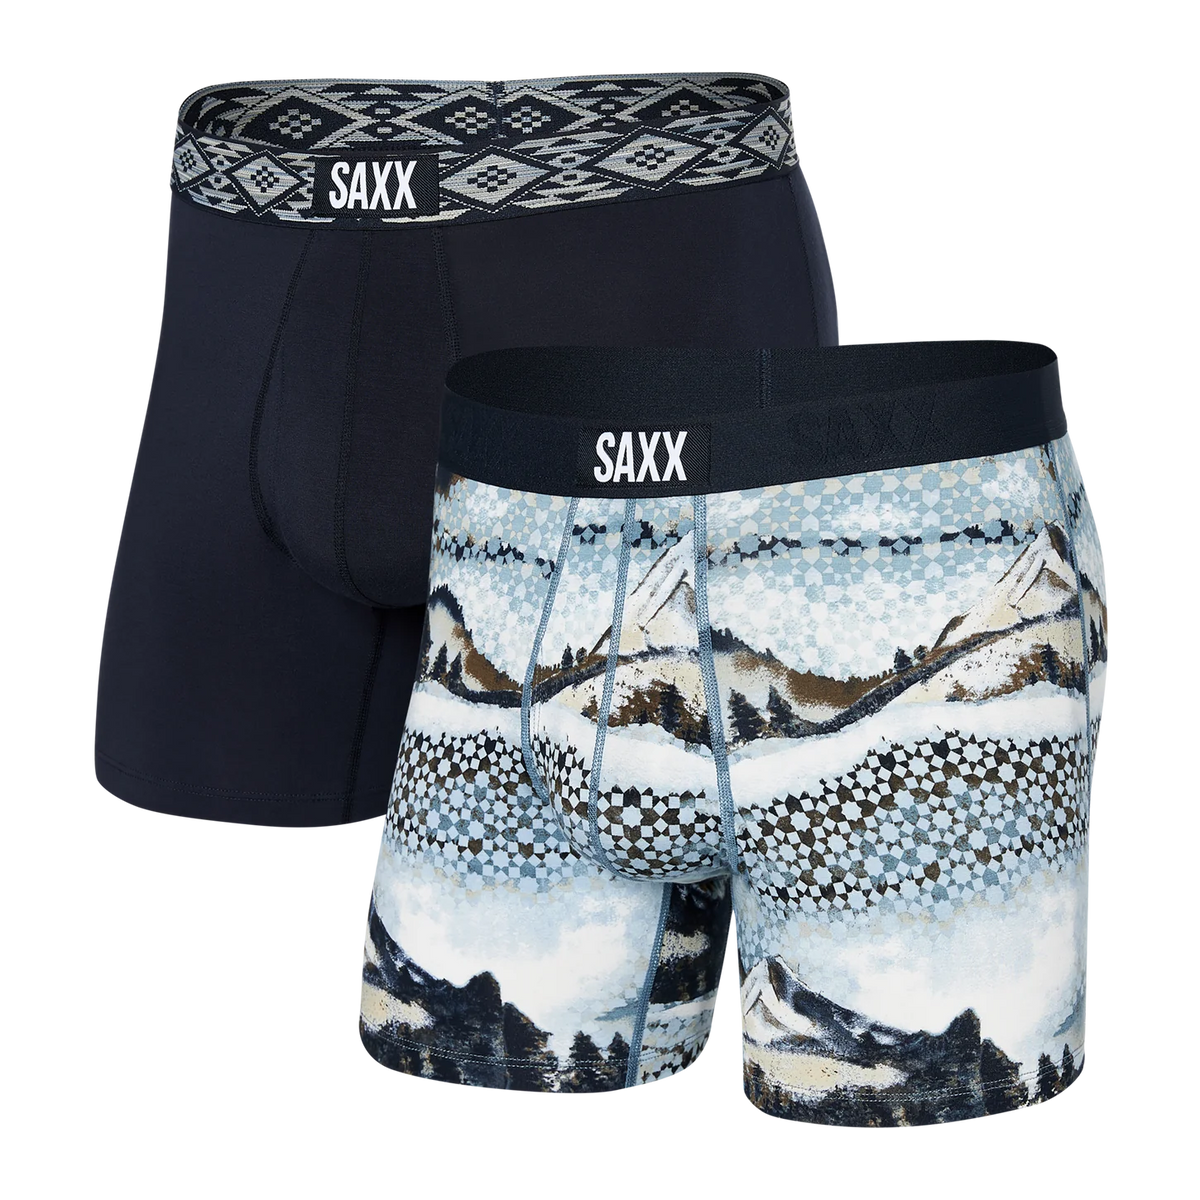 SAXX Ultra Stretch Boxer Briefs - Men's Boxers in Space Dye